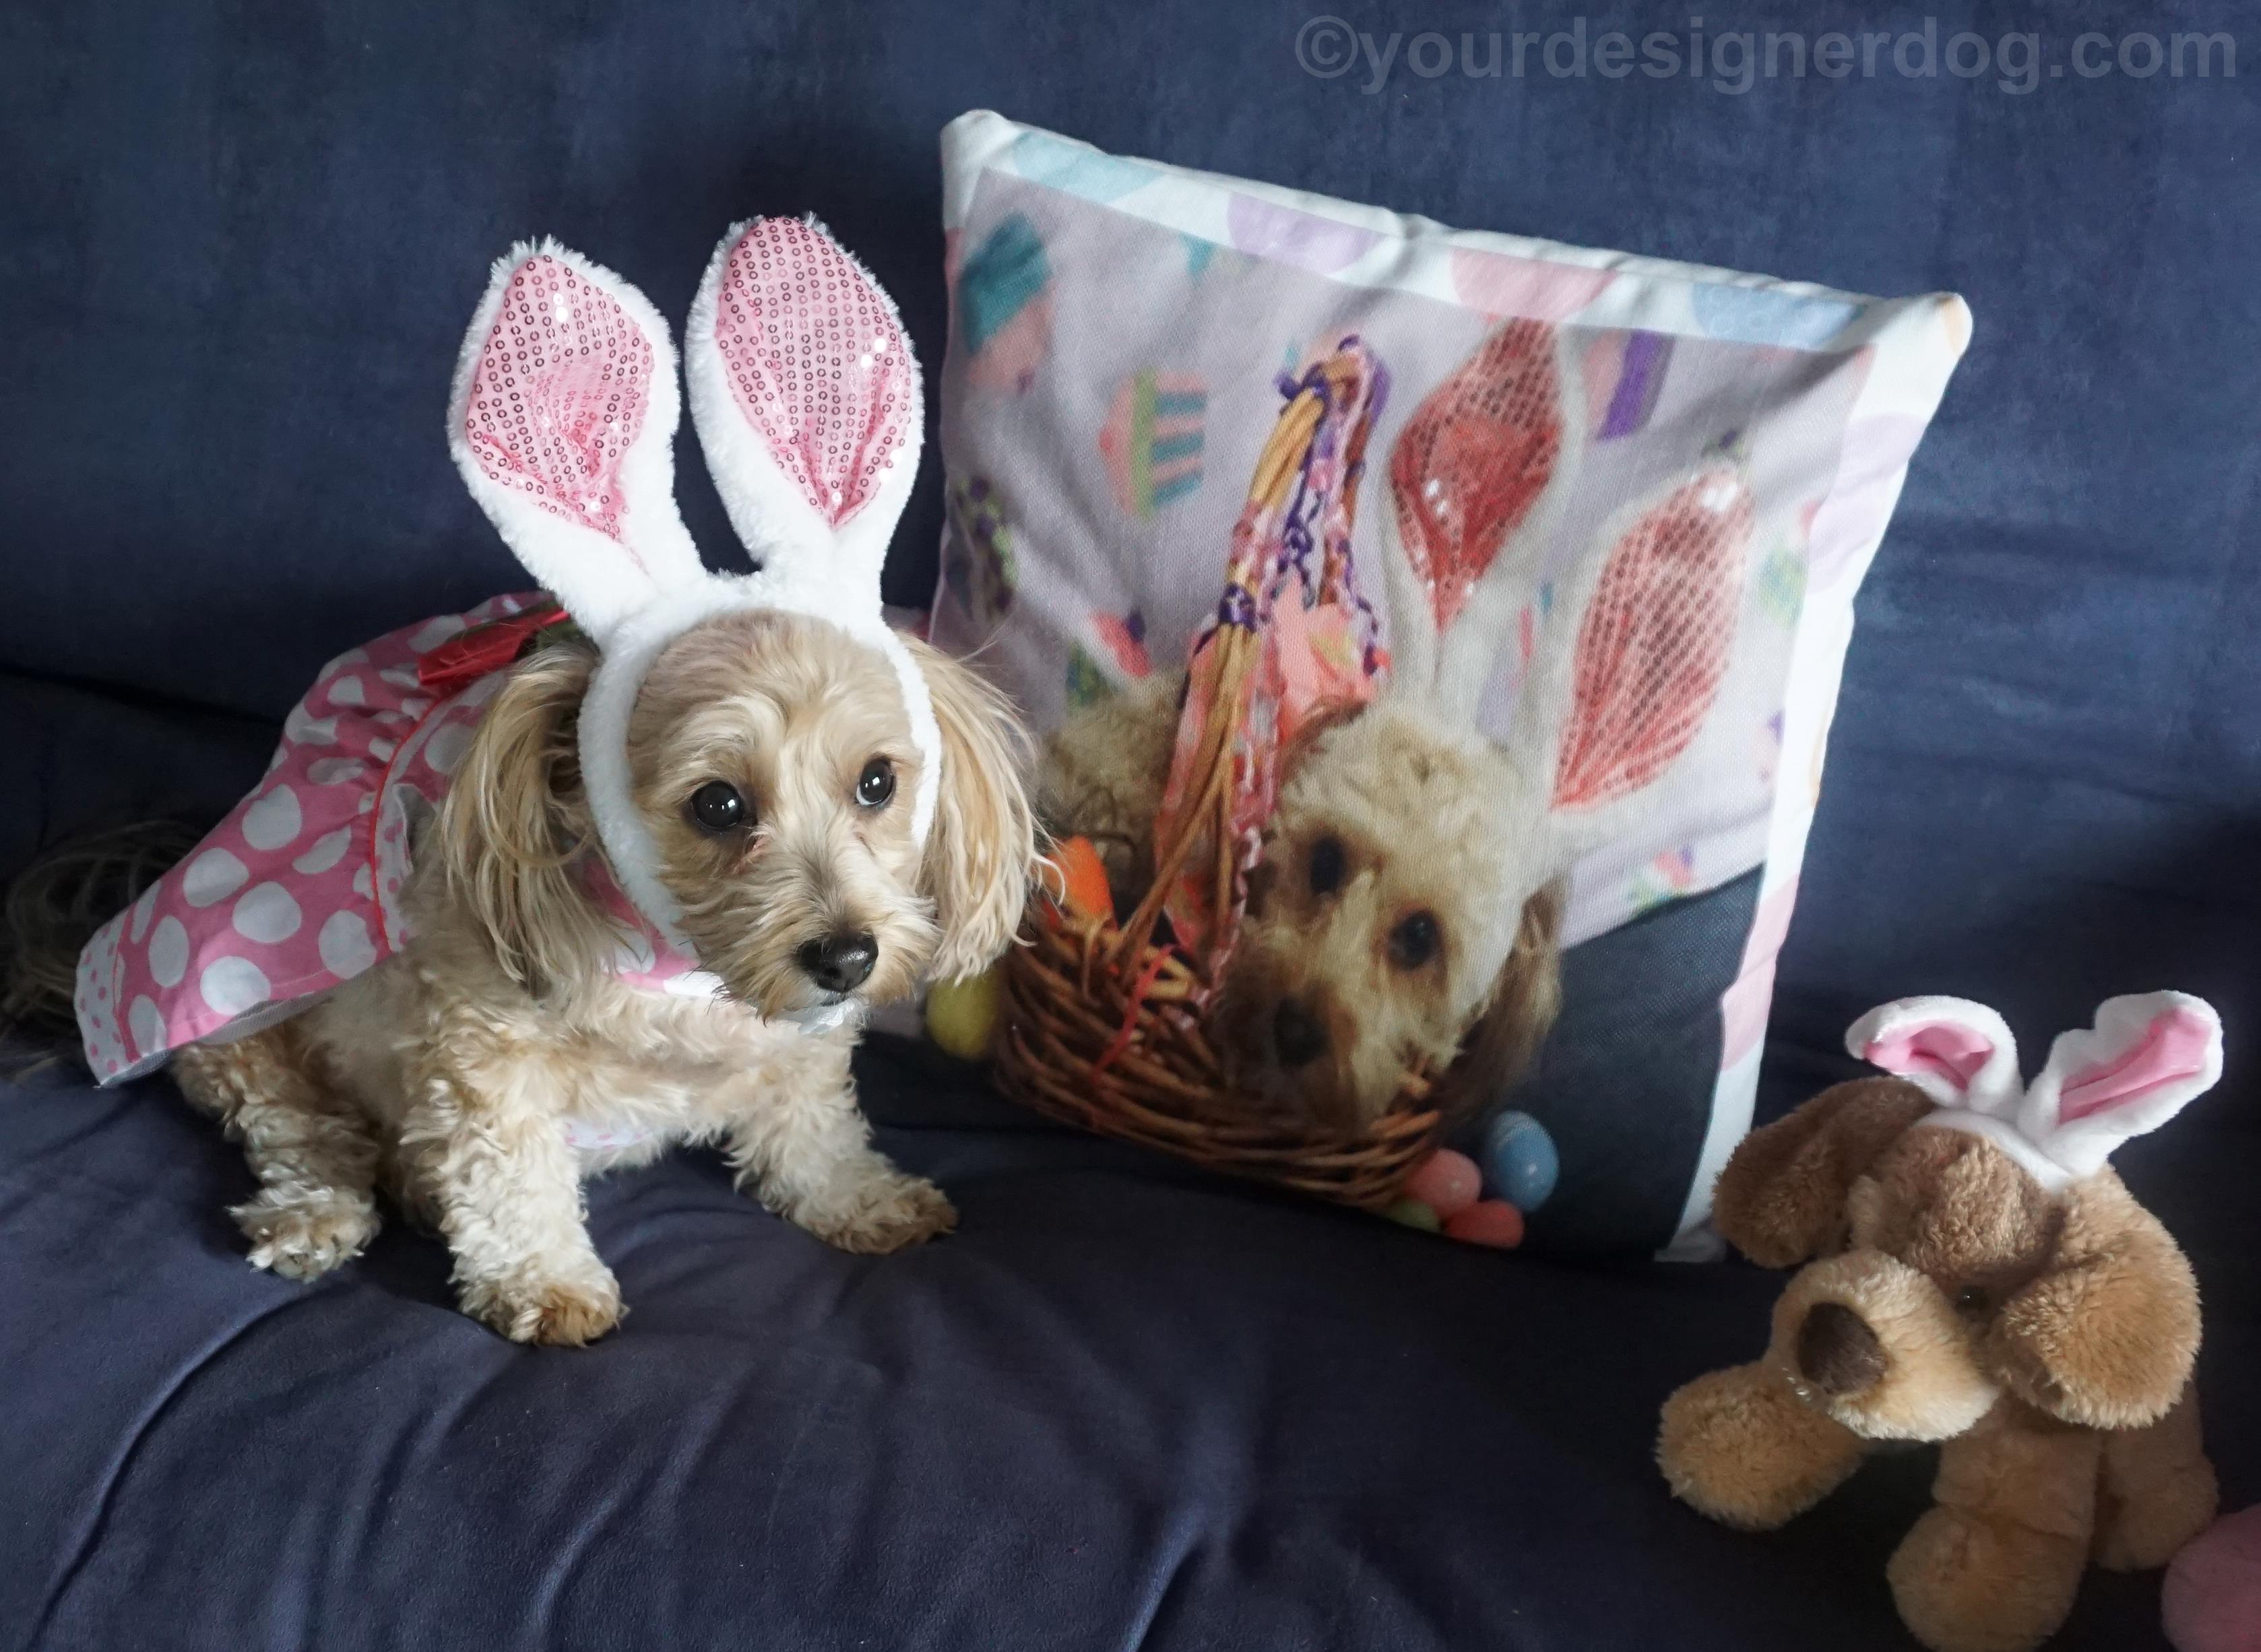 dogs, designer dogs, Yorkipoo, yorkie poo, twins, Easter, bunny ears, look alike, doppelganger